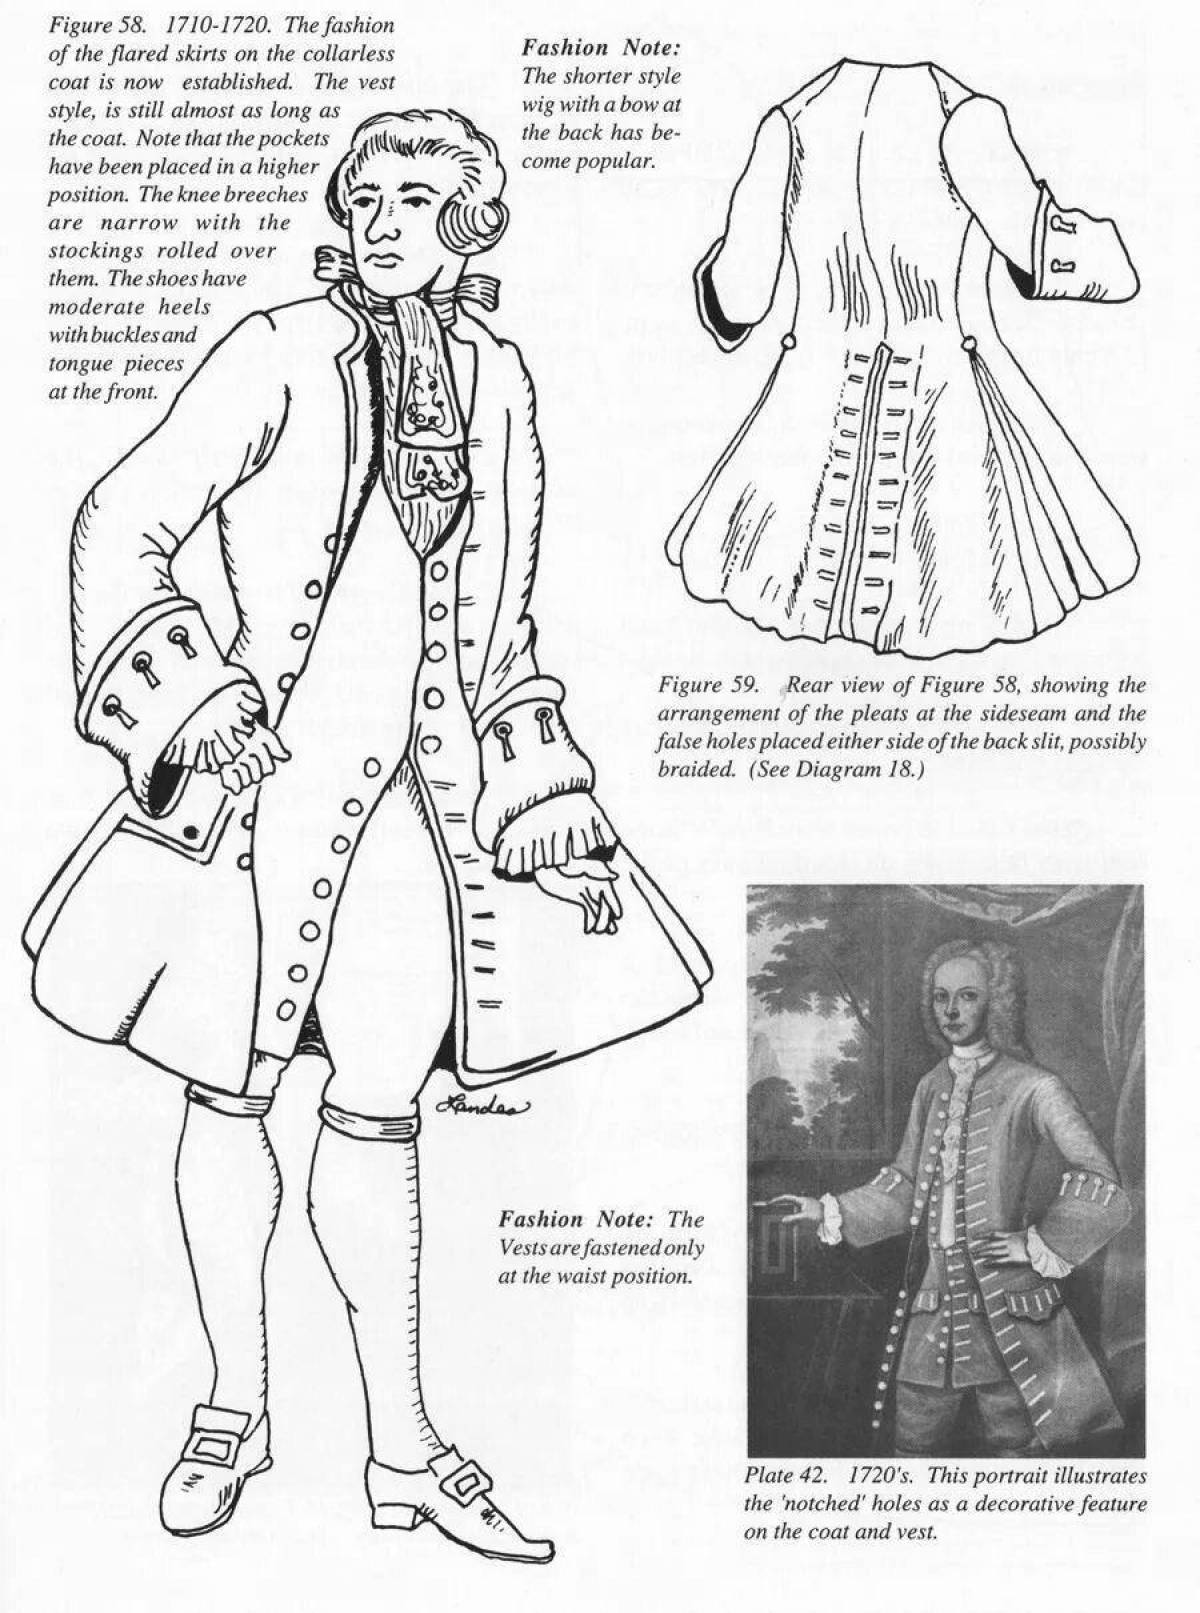 Impressive coloring of 18th century costumes